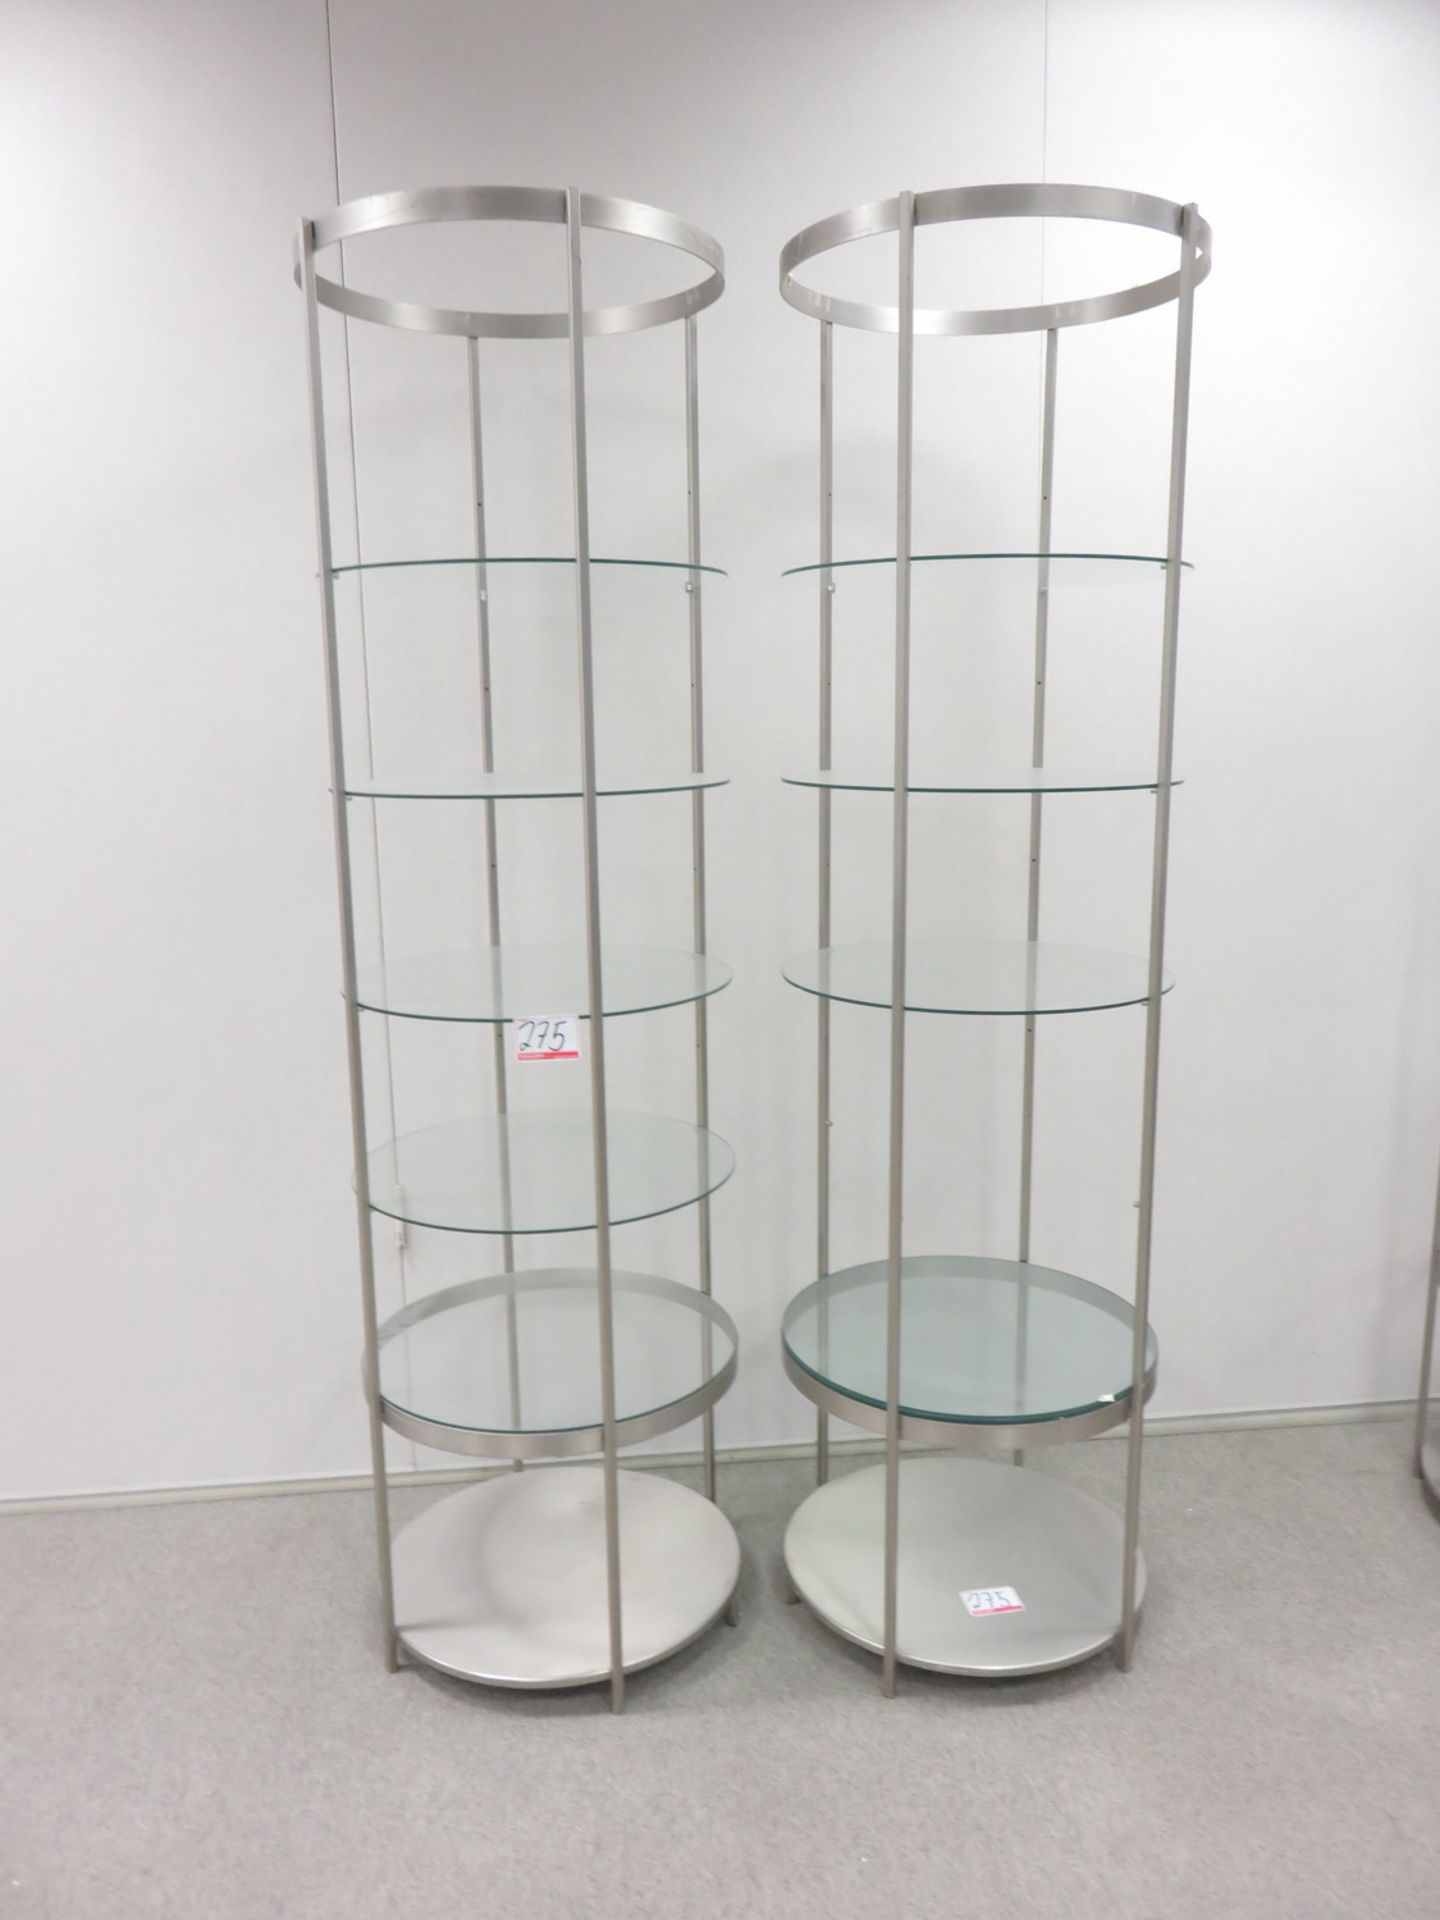 UNITS - GREY STEEL + GLASS 6-SHELF ROUND 2' DIA X 7'H DISPLAYS (FLOOR 5-B1)